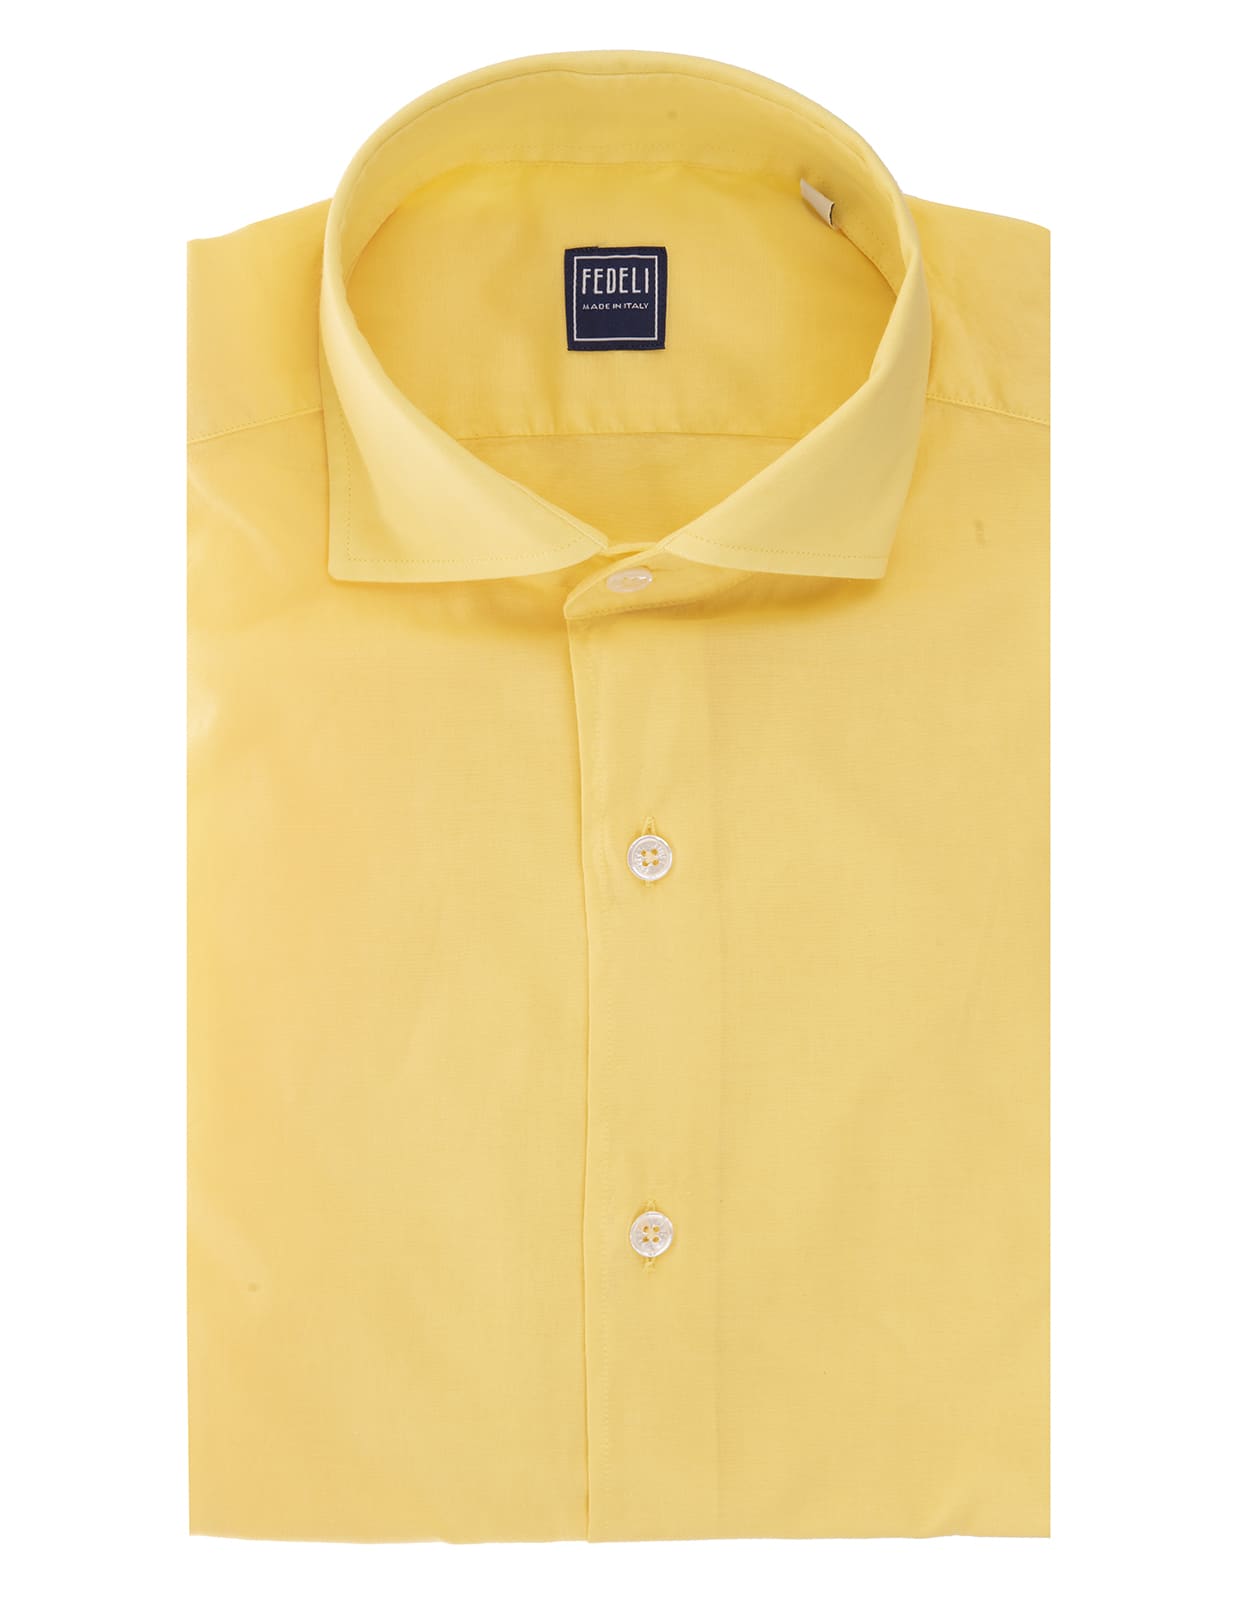 Fedeli Man Yellow Lightweight Cotton Shirt